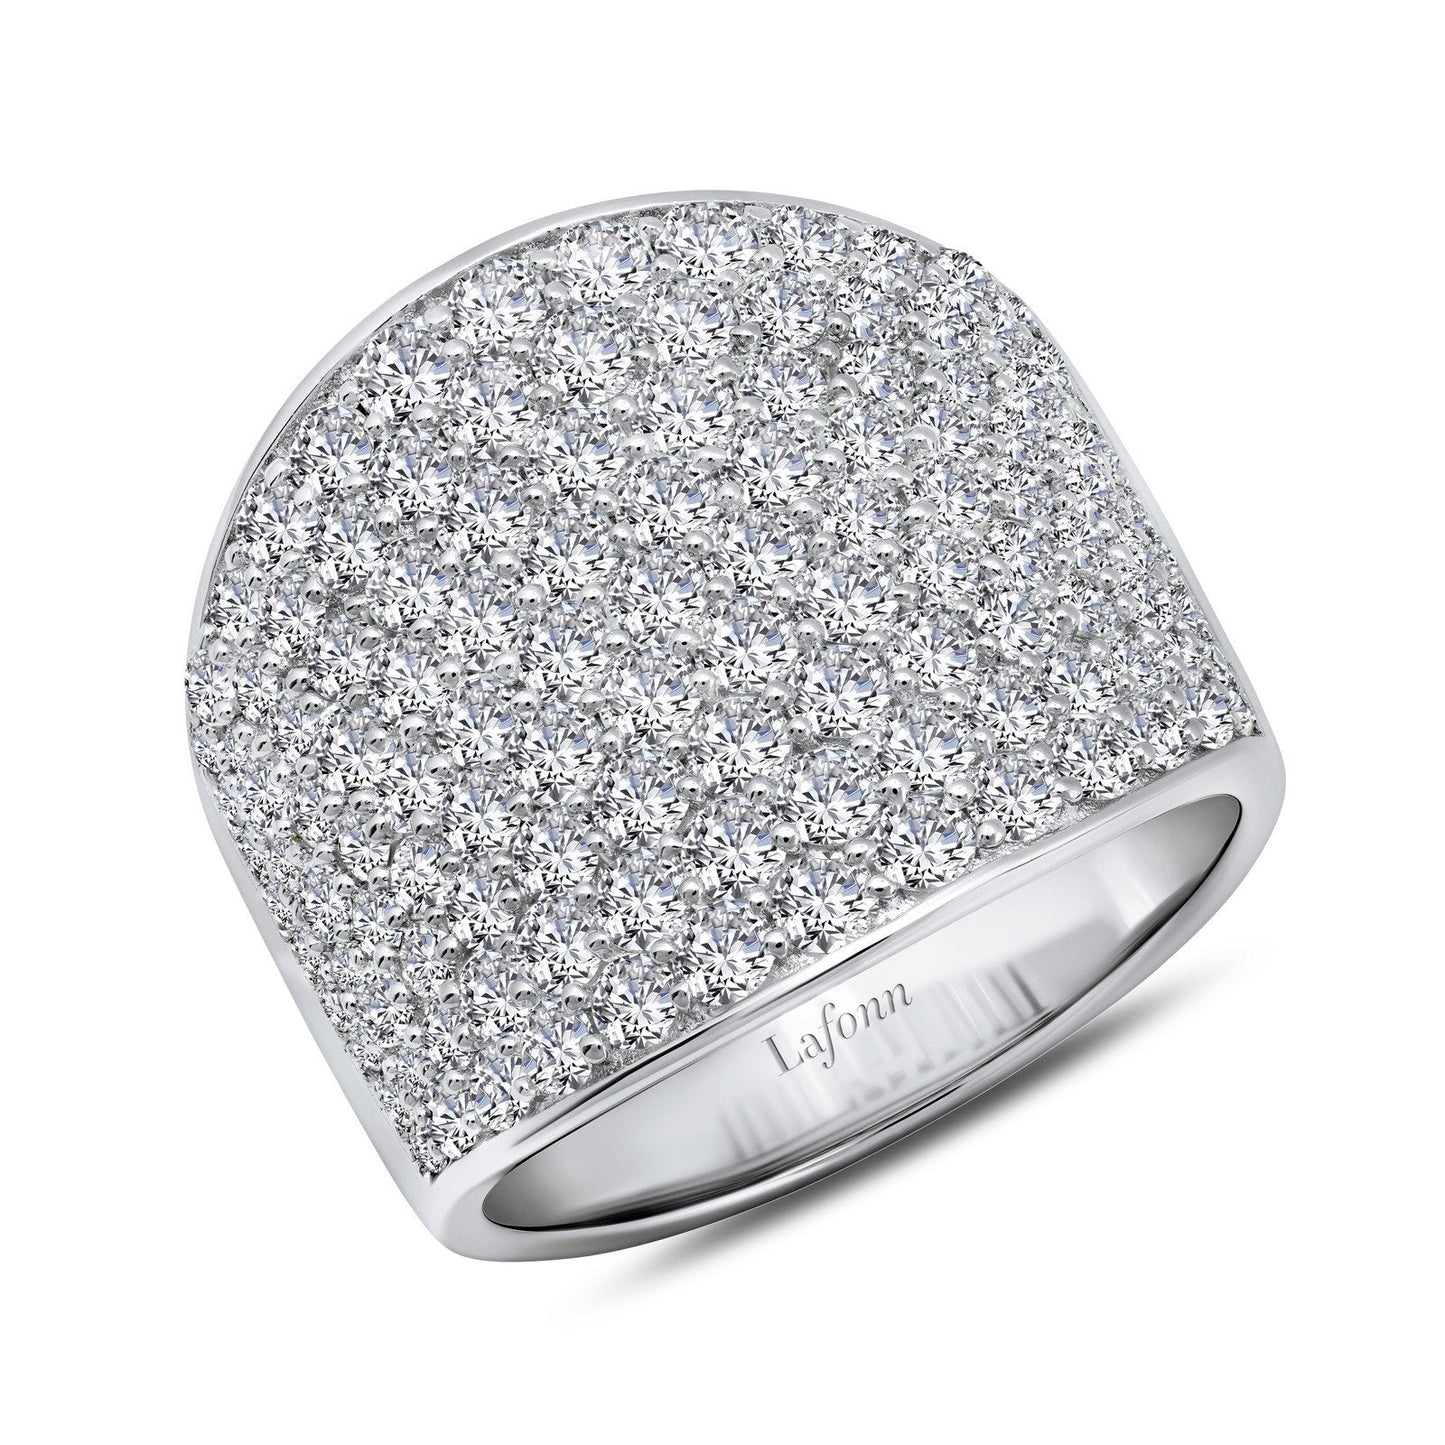 Lafonn Anniversary Half-Eternity Band Simulated Diamond RINGS Size 10 Platinum 2.95 CTS Approx. 20.0mm (W)